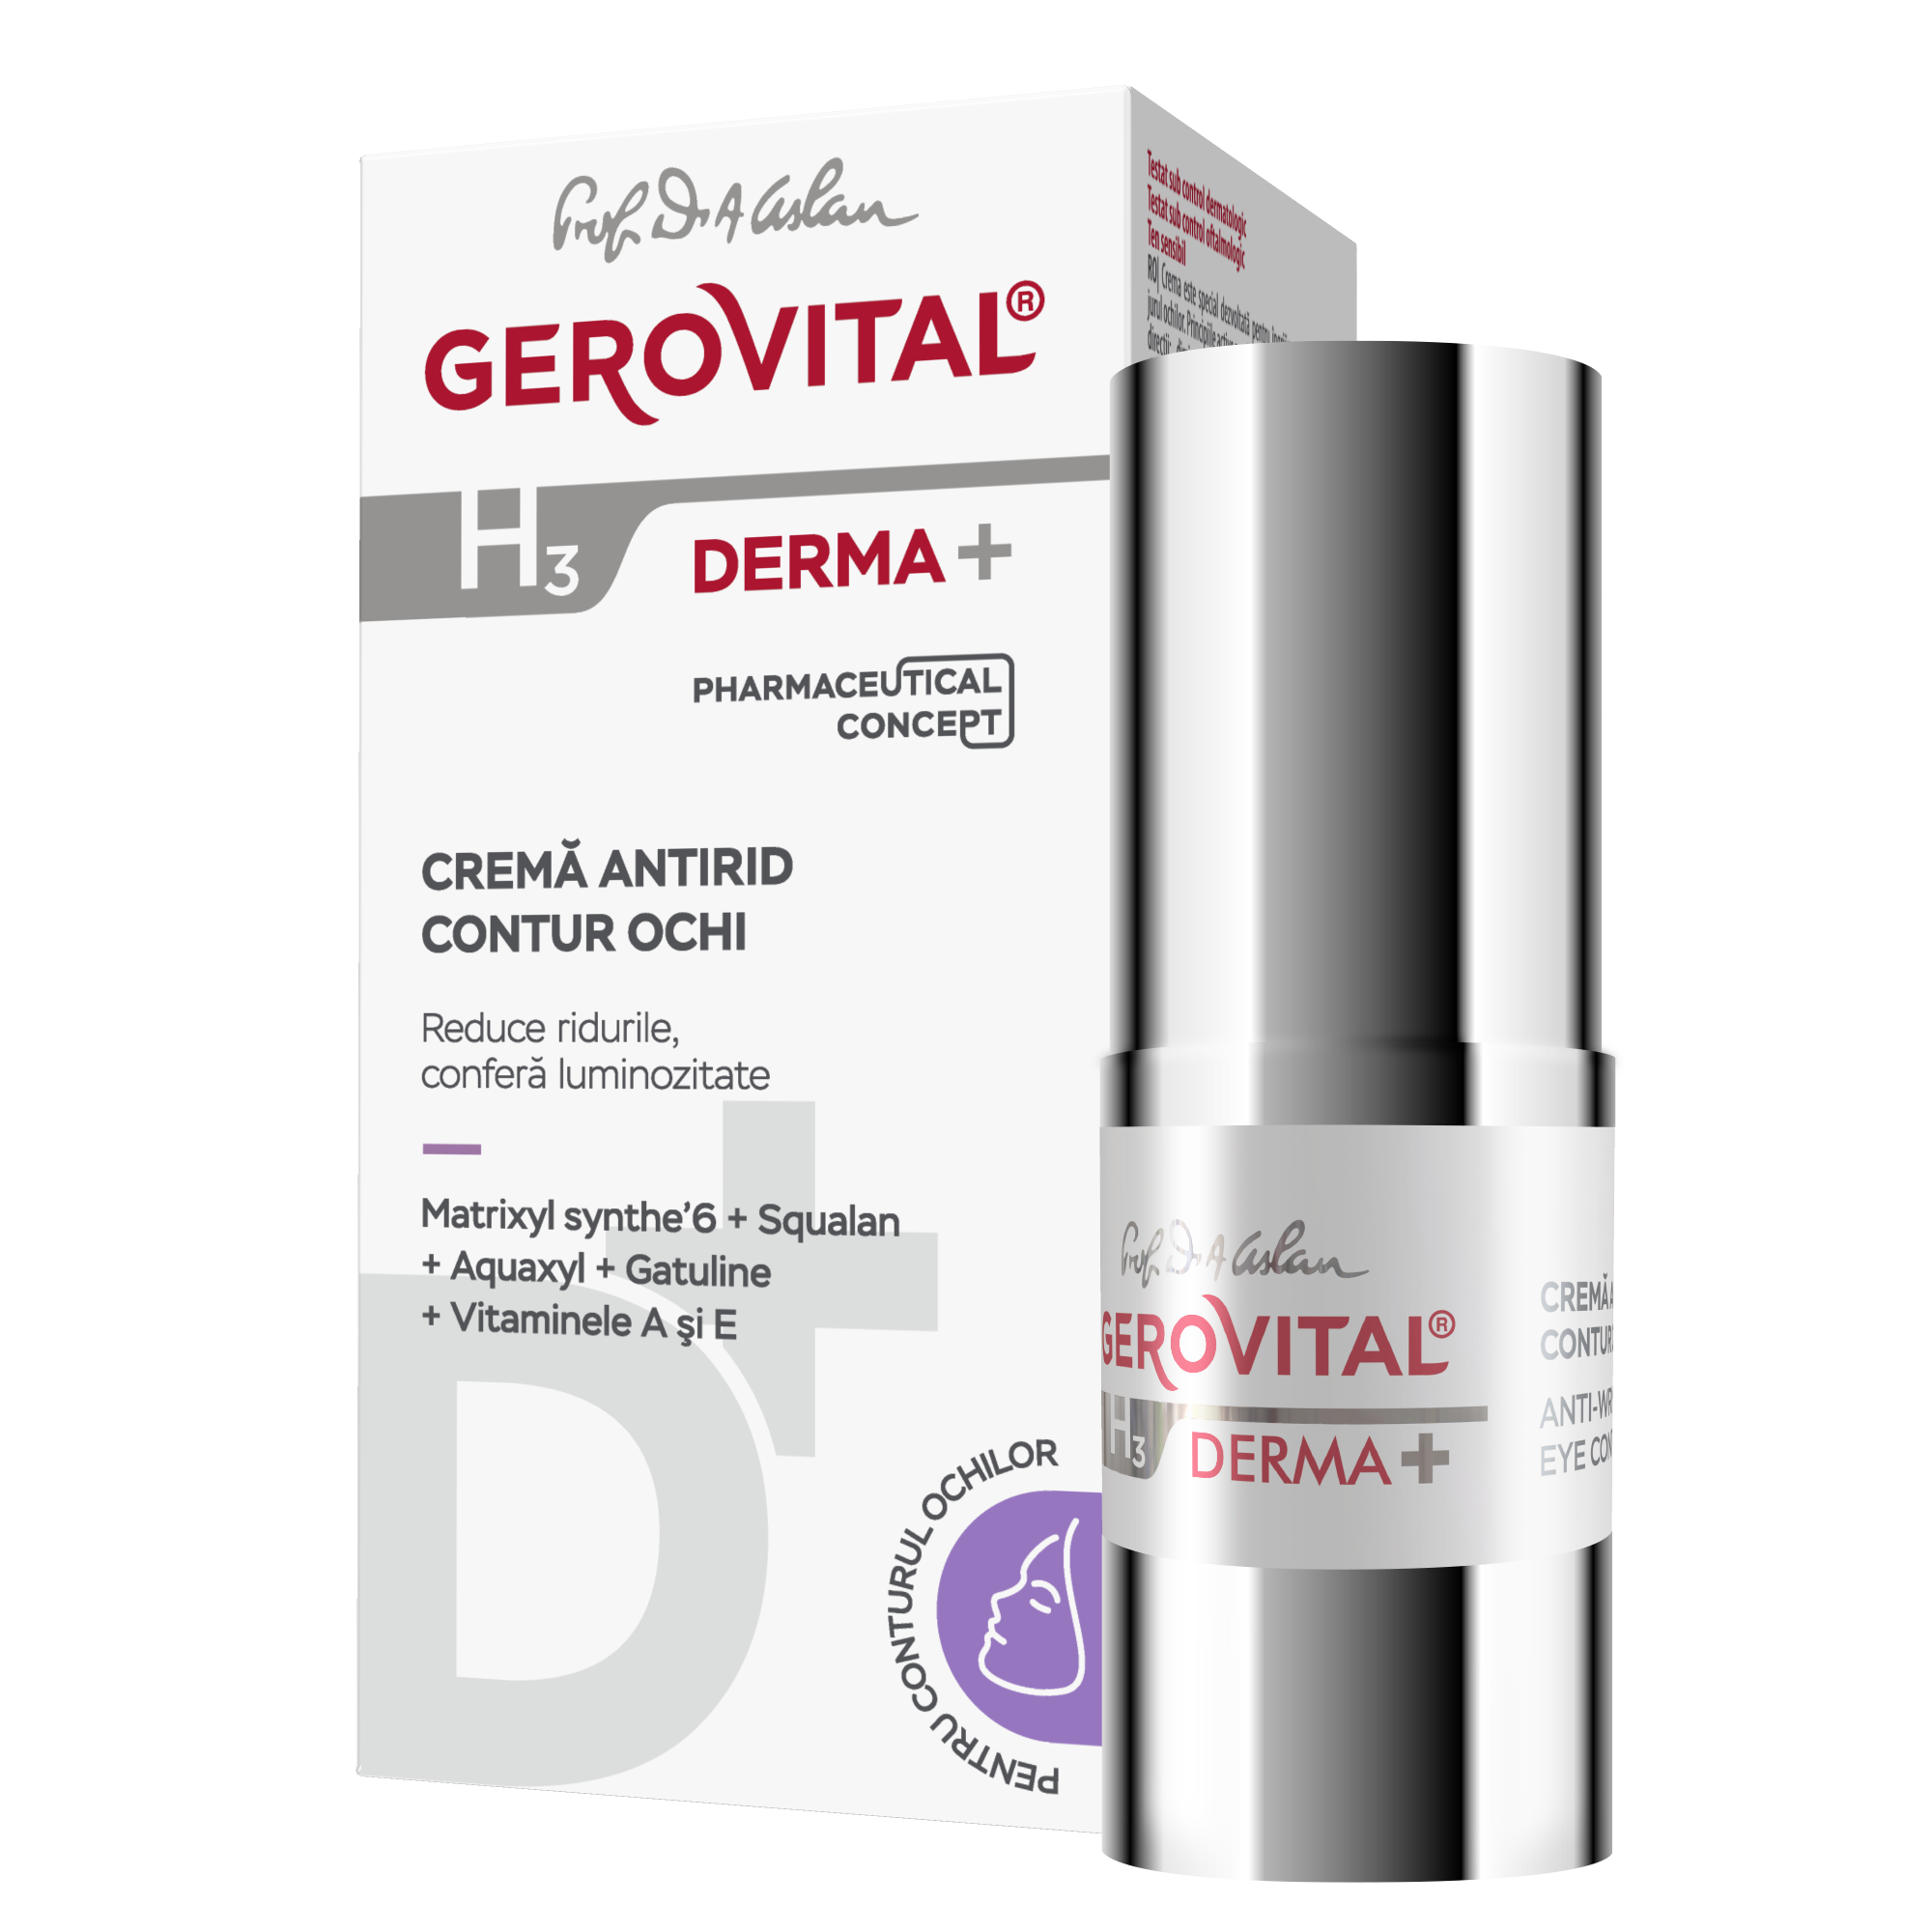 Crema antirid pentru contur ochi Gerovital H3 Derma+, 15 ml, Gerovital